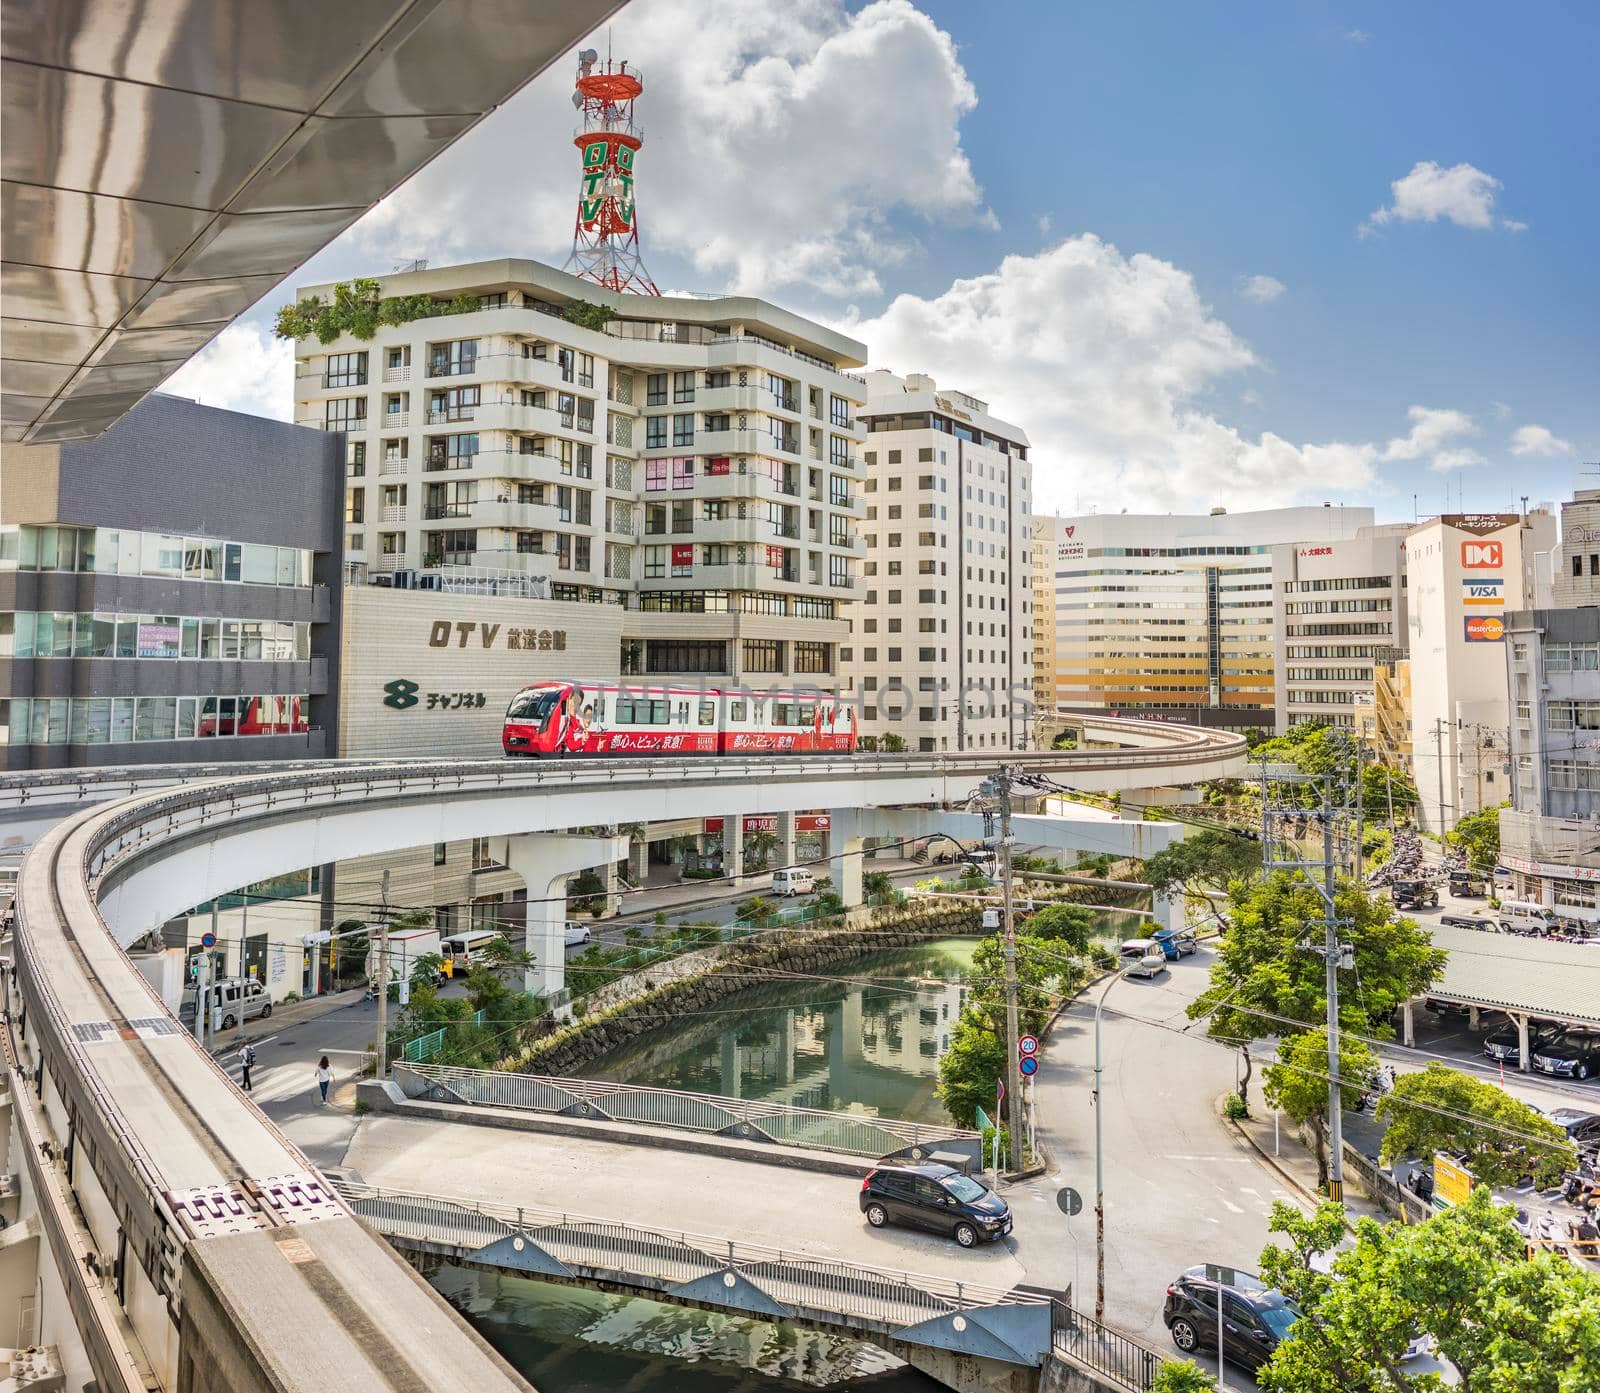 Naha city monorail in Okinawa island